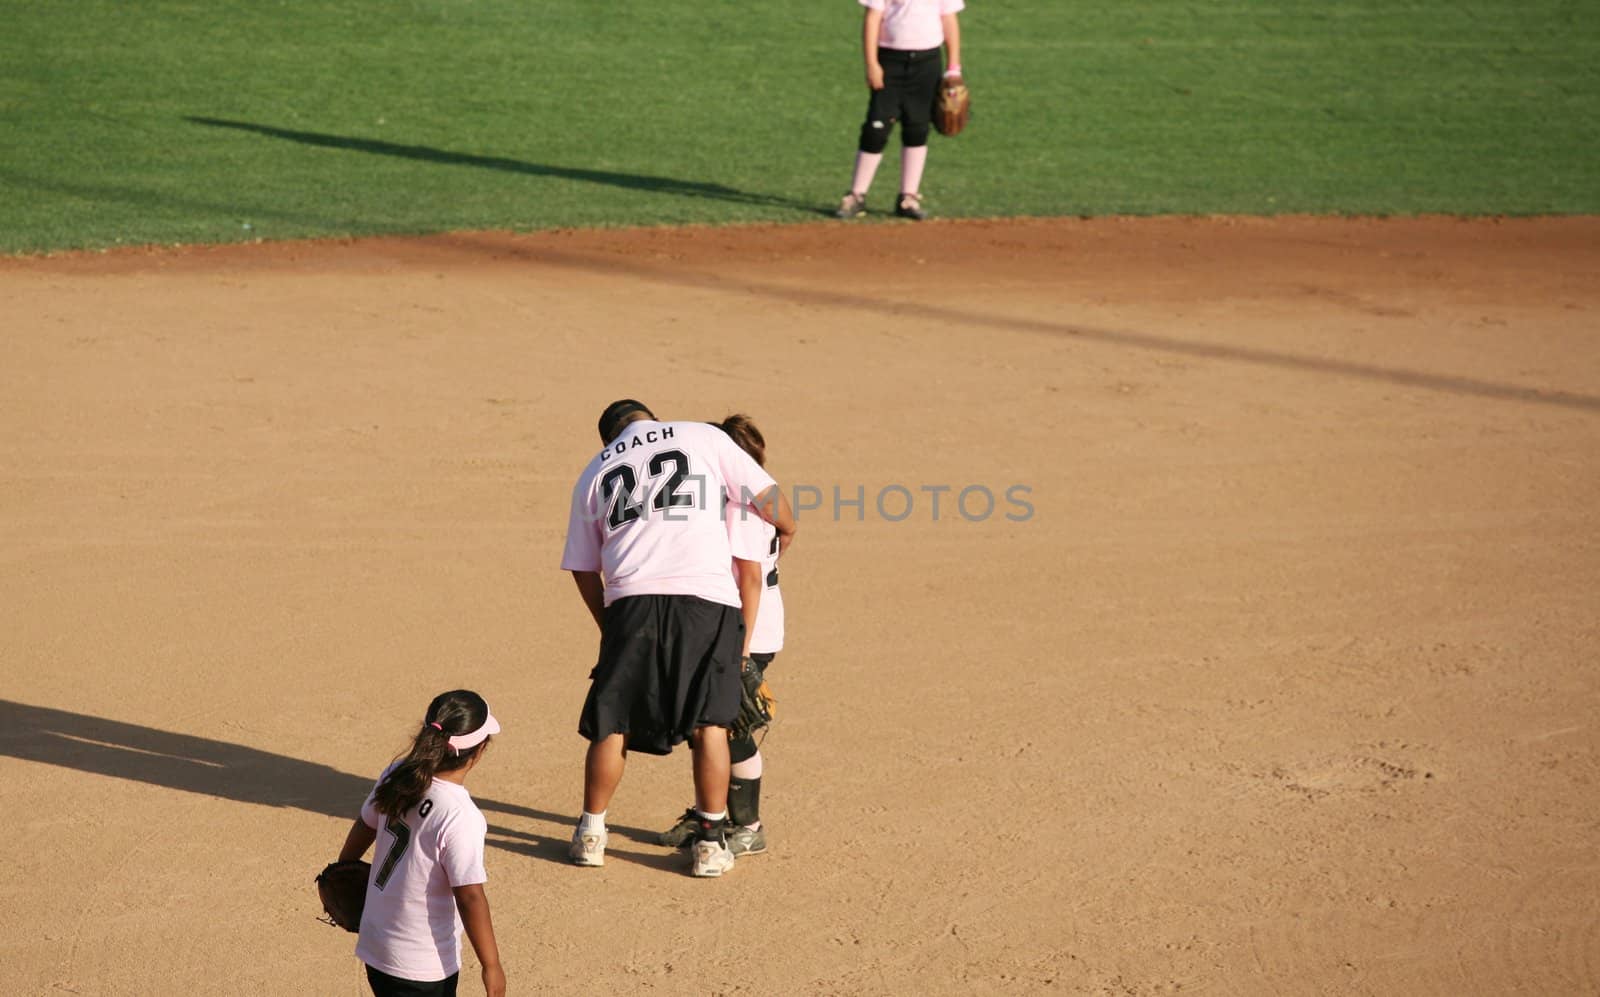 Baseball coach assisting a player